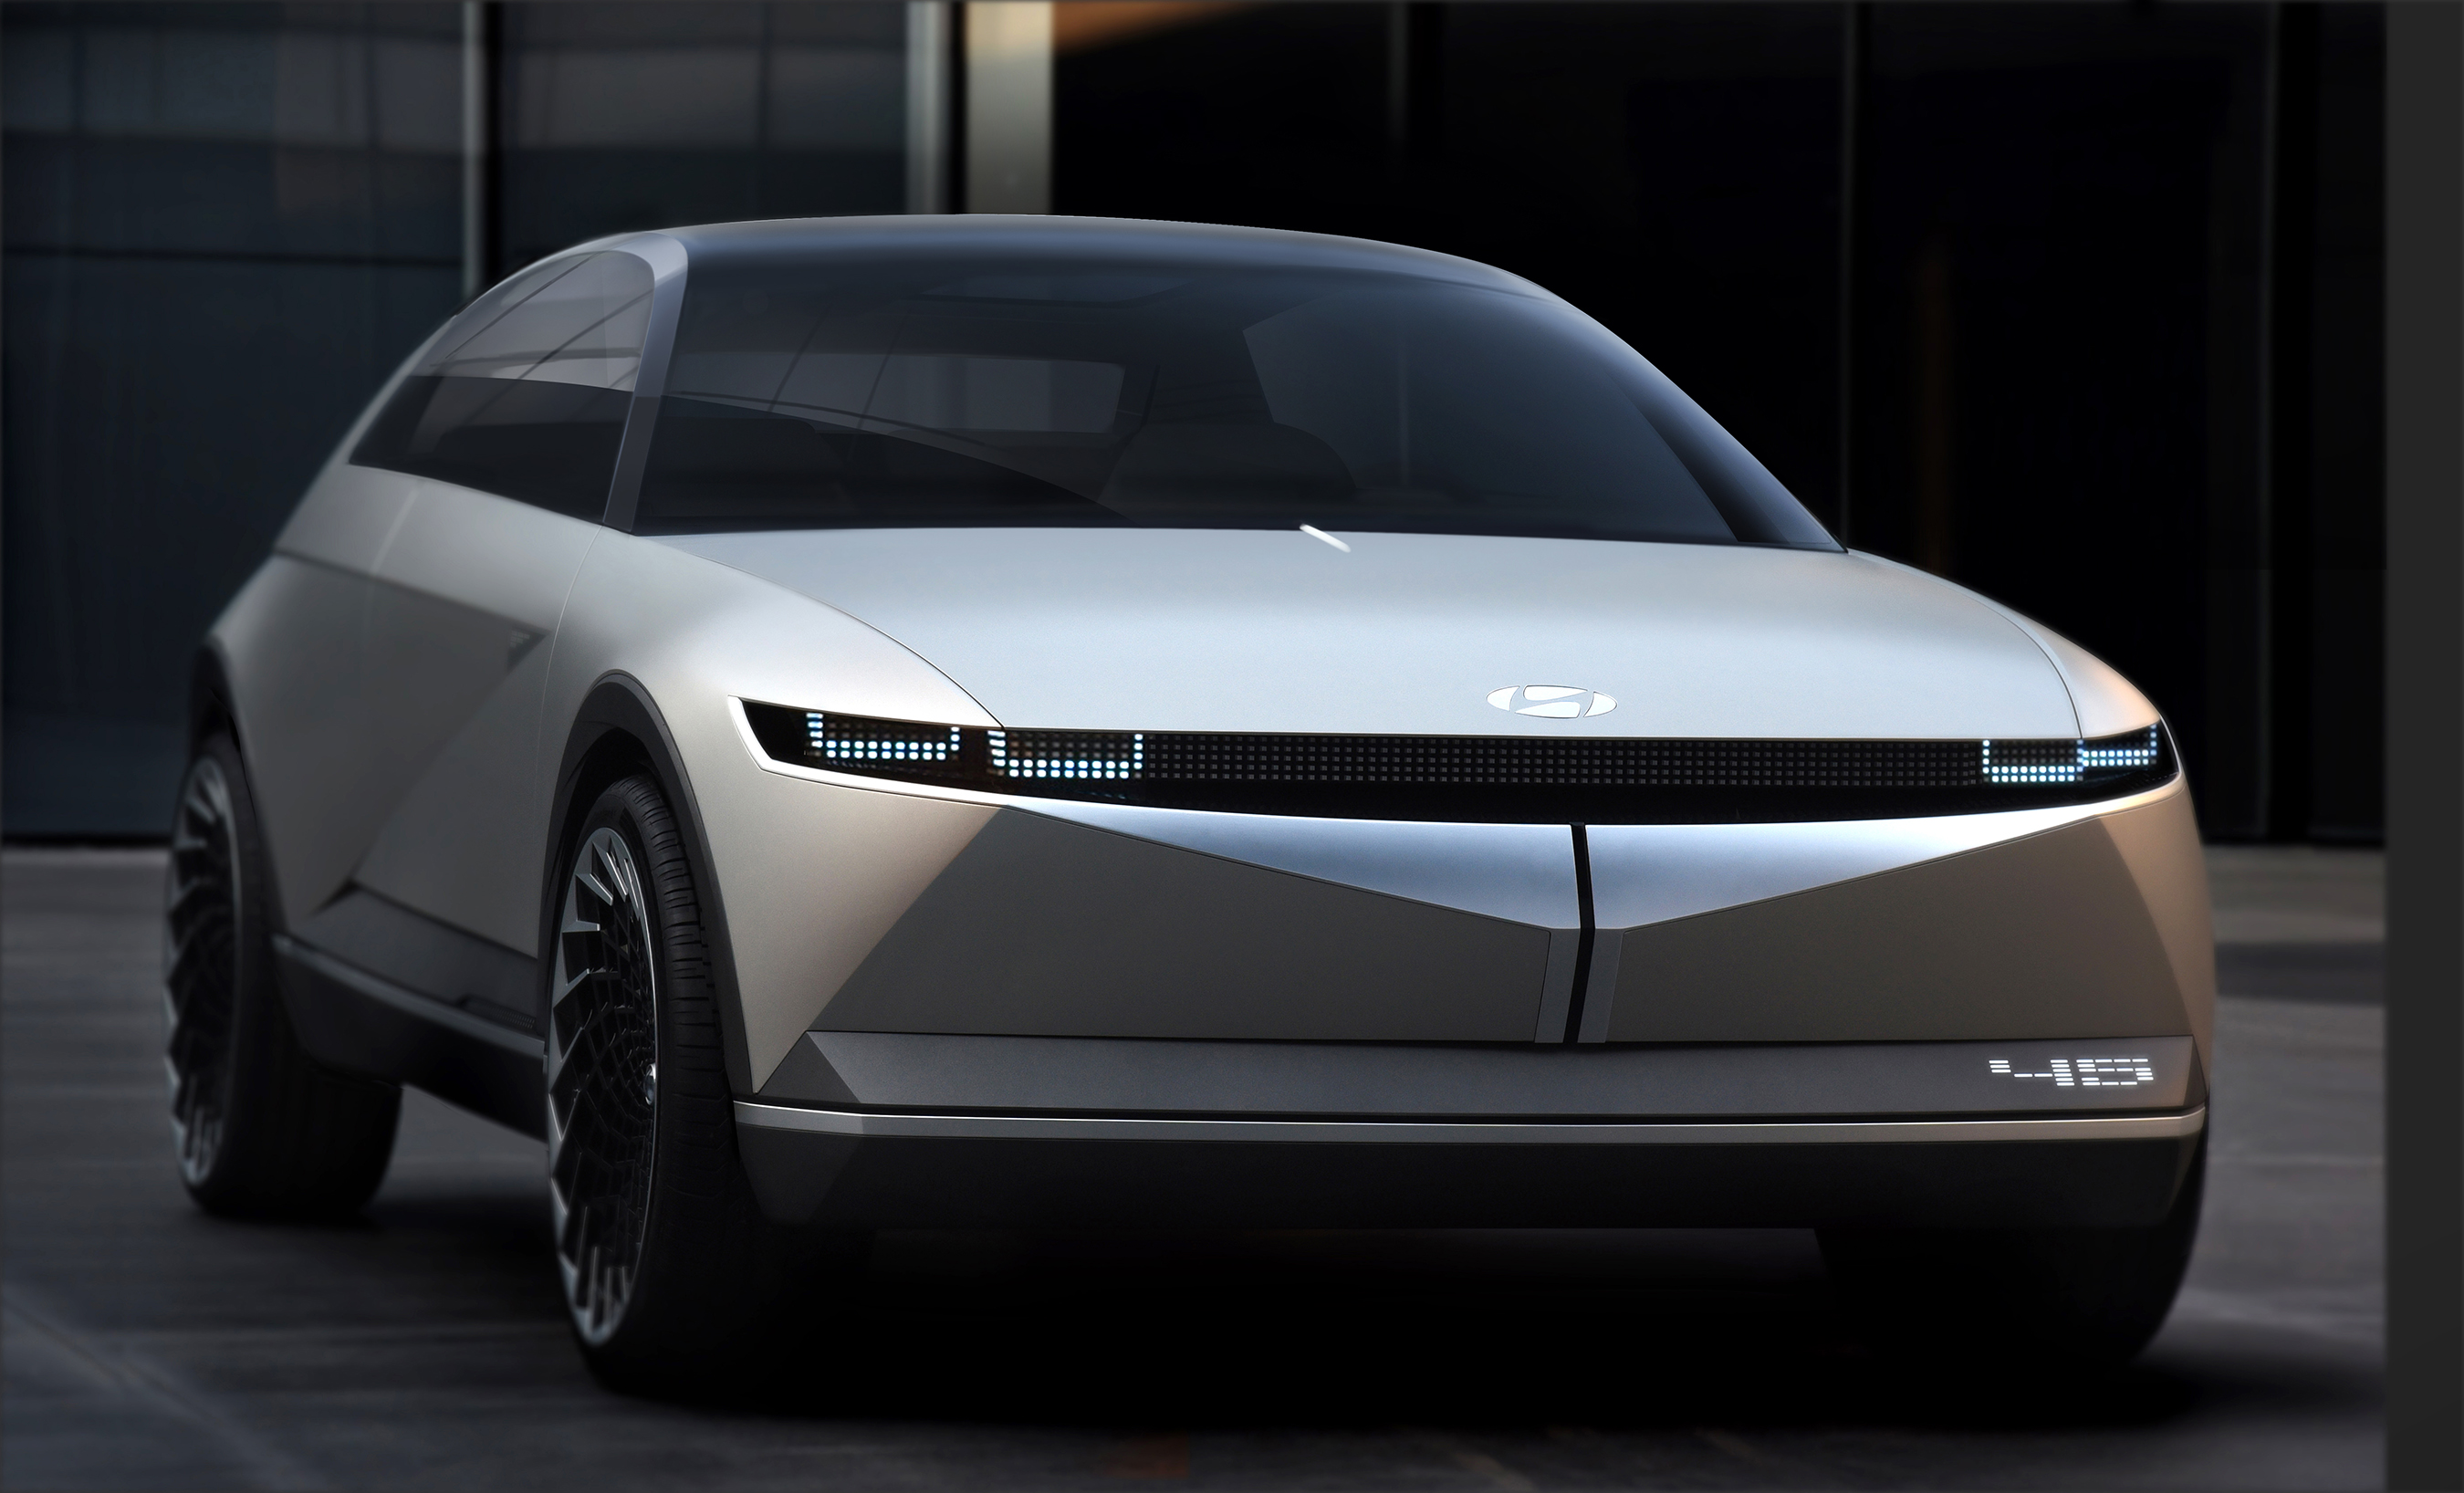 Hyundai Motor showcases new EV Concept "45" at 2019 Frankfurt Motor Show